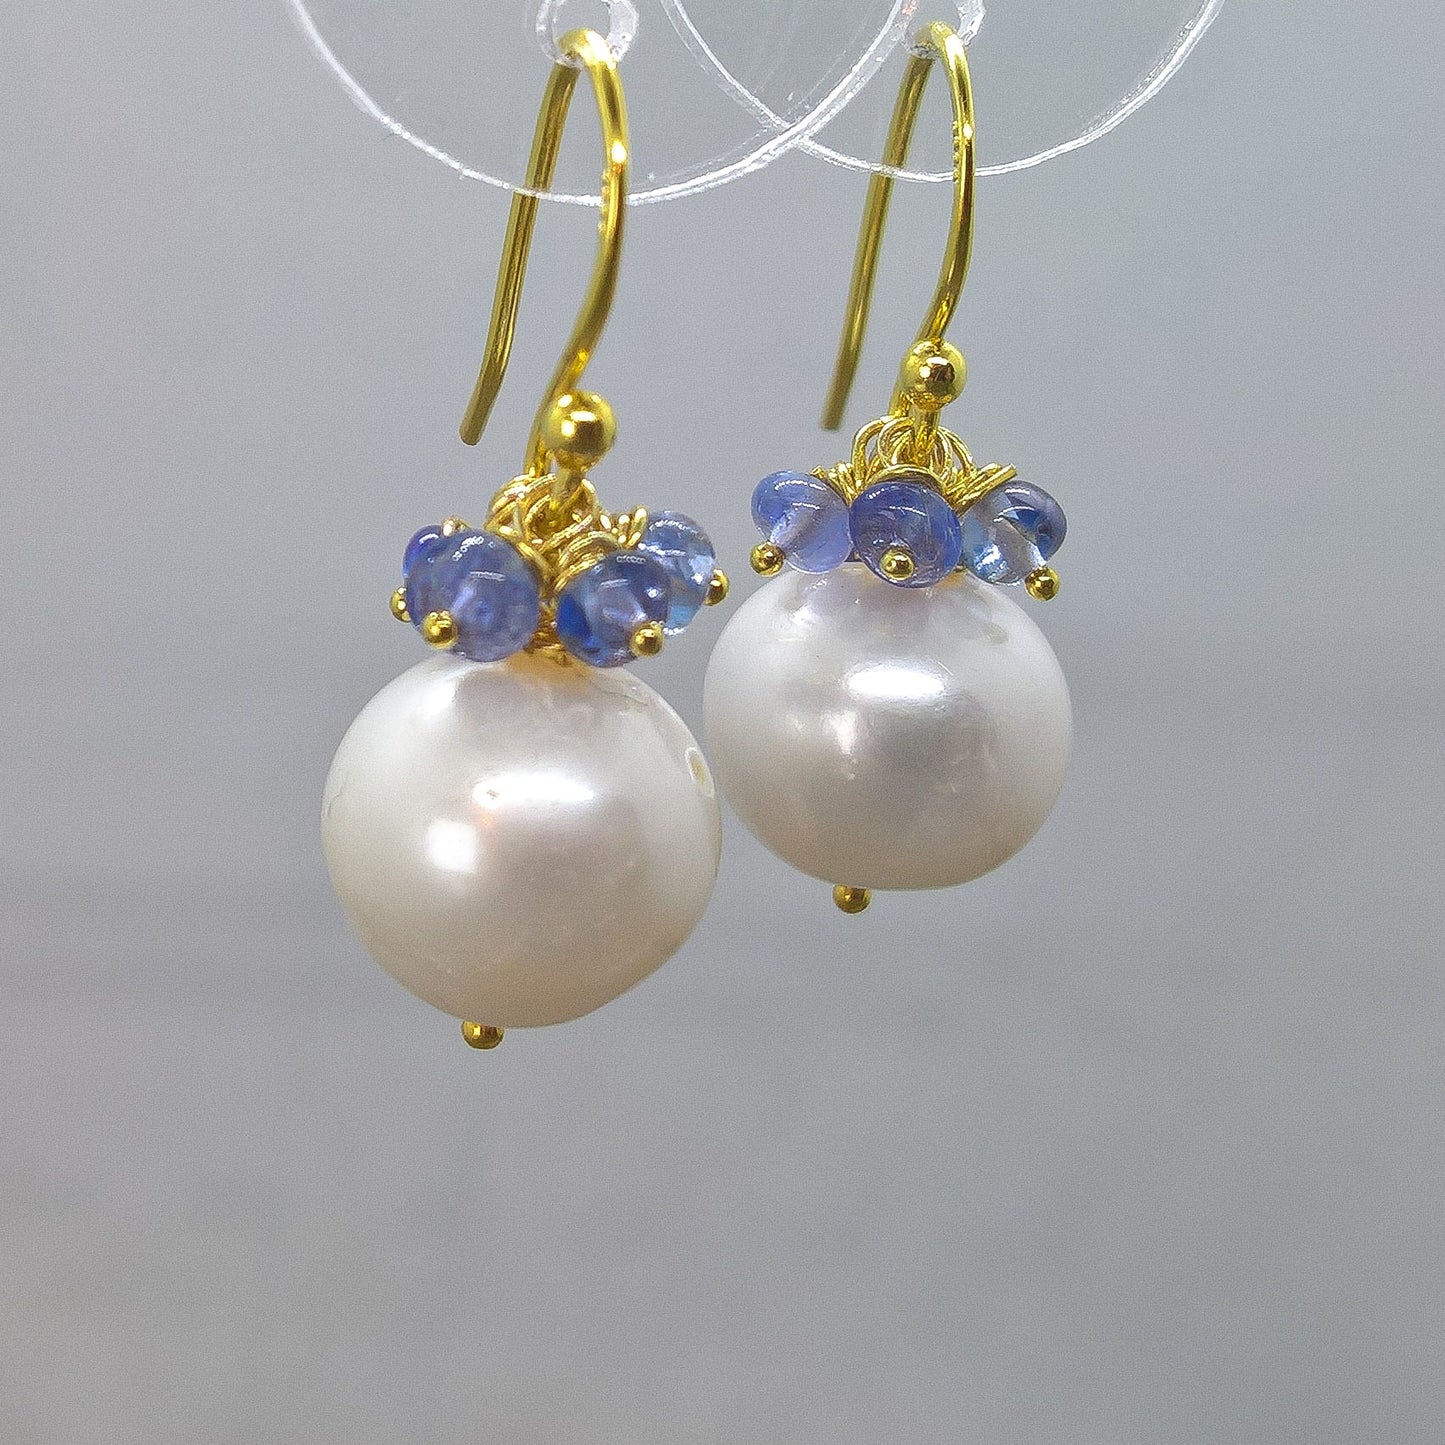 Tanzanite and pearl drop earrings